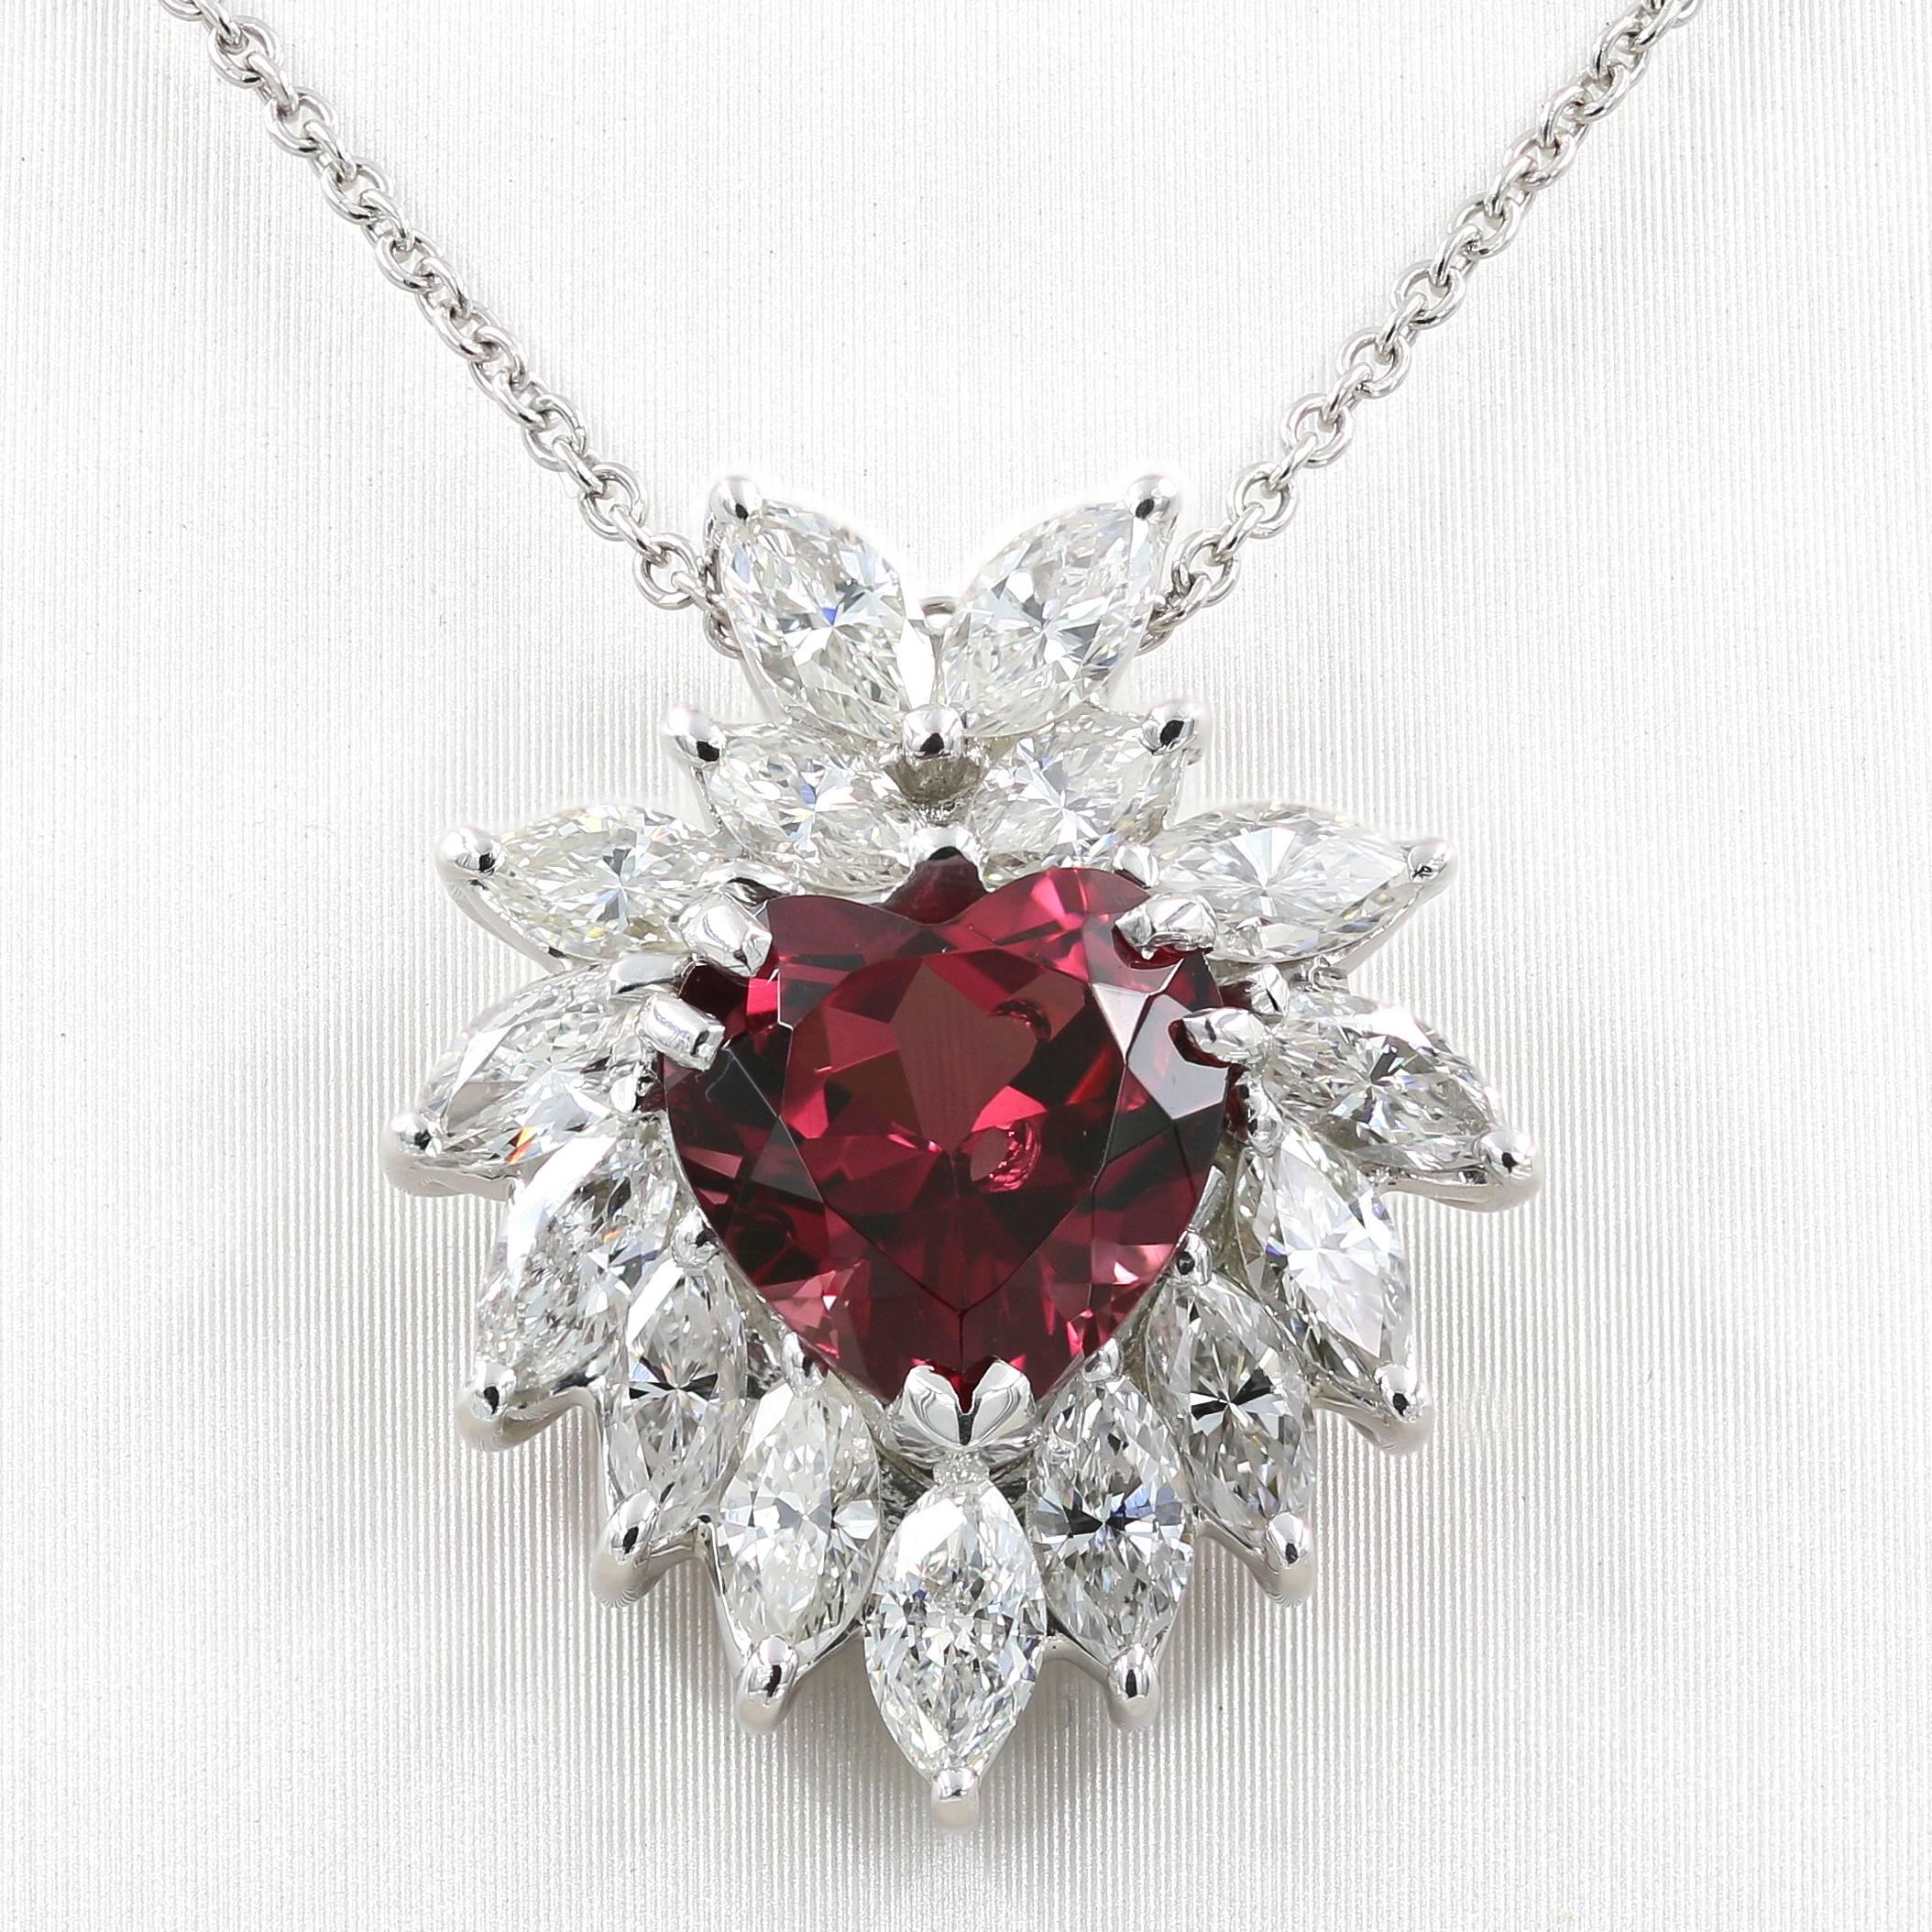 Women's Heart Shaped Rhodolite Garnet and Marquise Diamond Necklace in Platinum